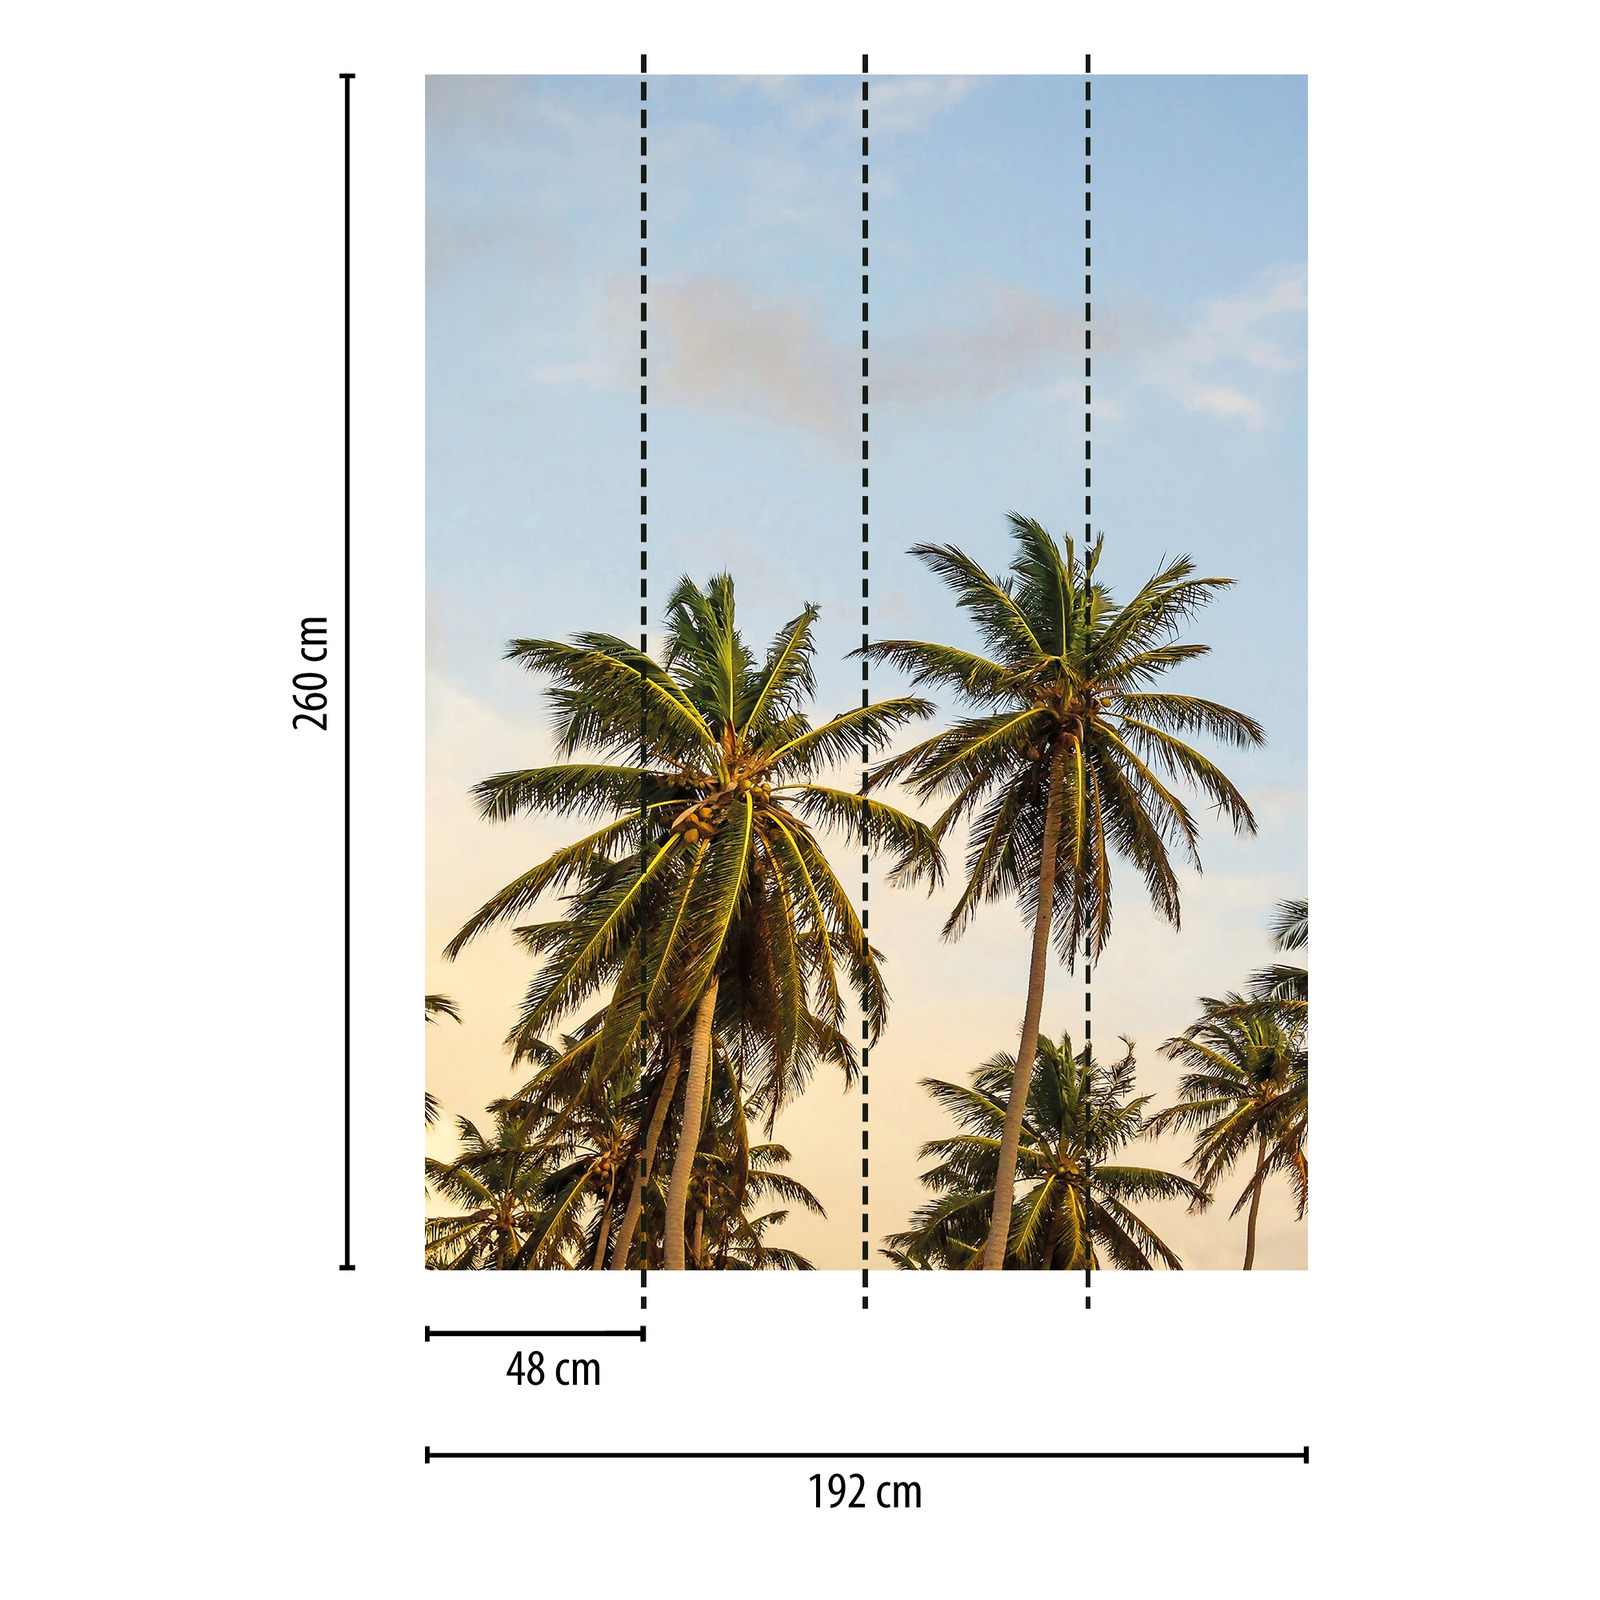             Smalle palmbomen in Ibiza muurschildering
        